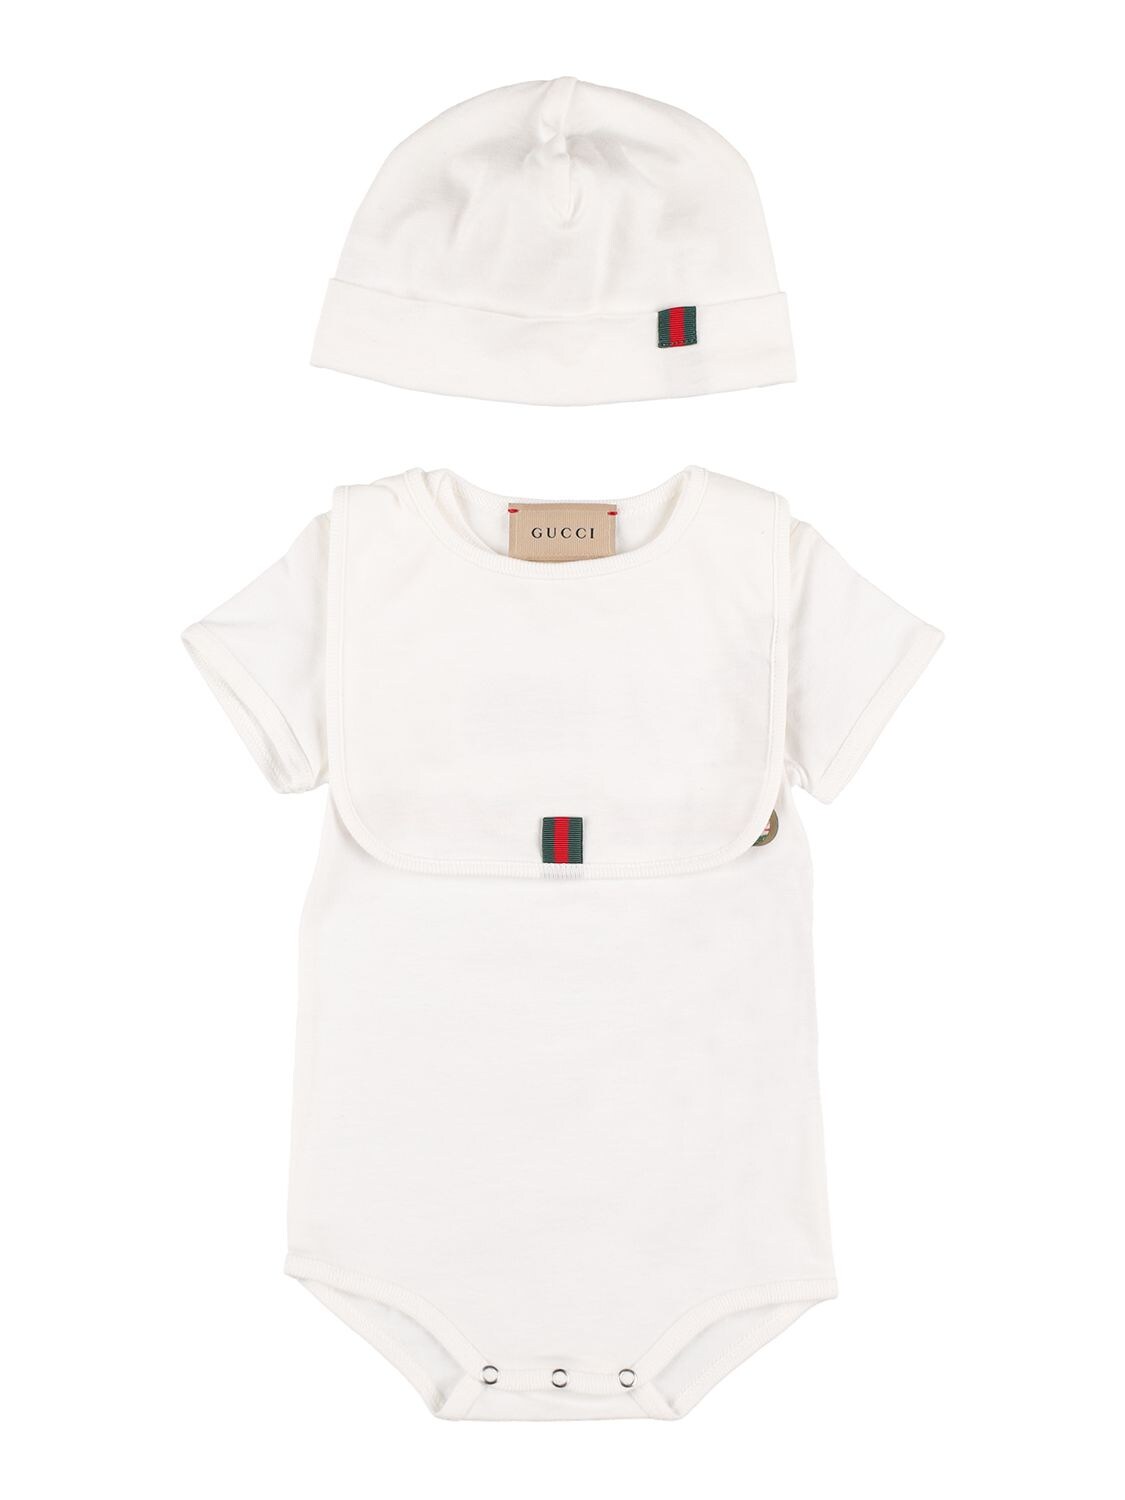 Gucci Babies' Logo Cotton Jersey Bodysuit, Hat & Bib In Weiss